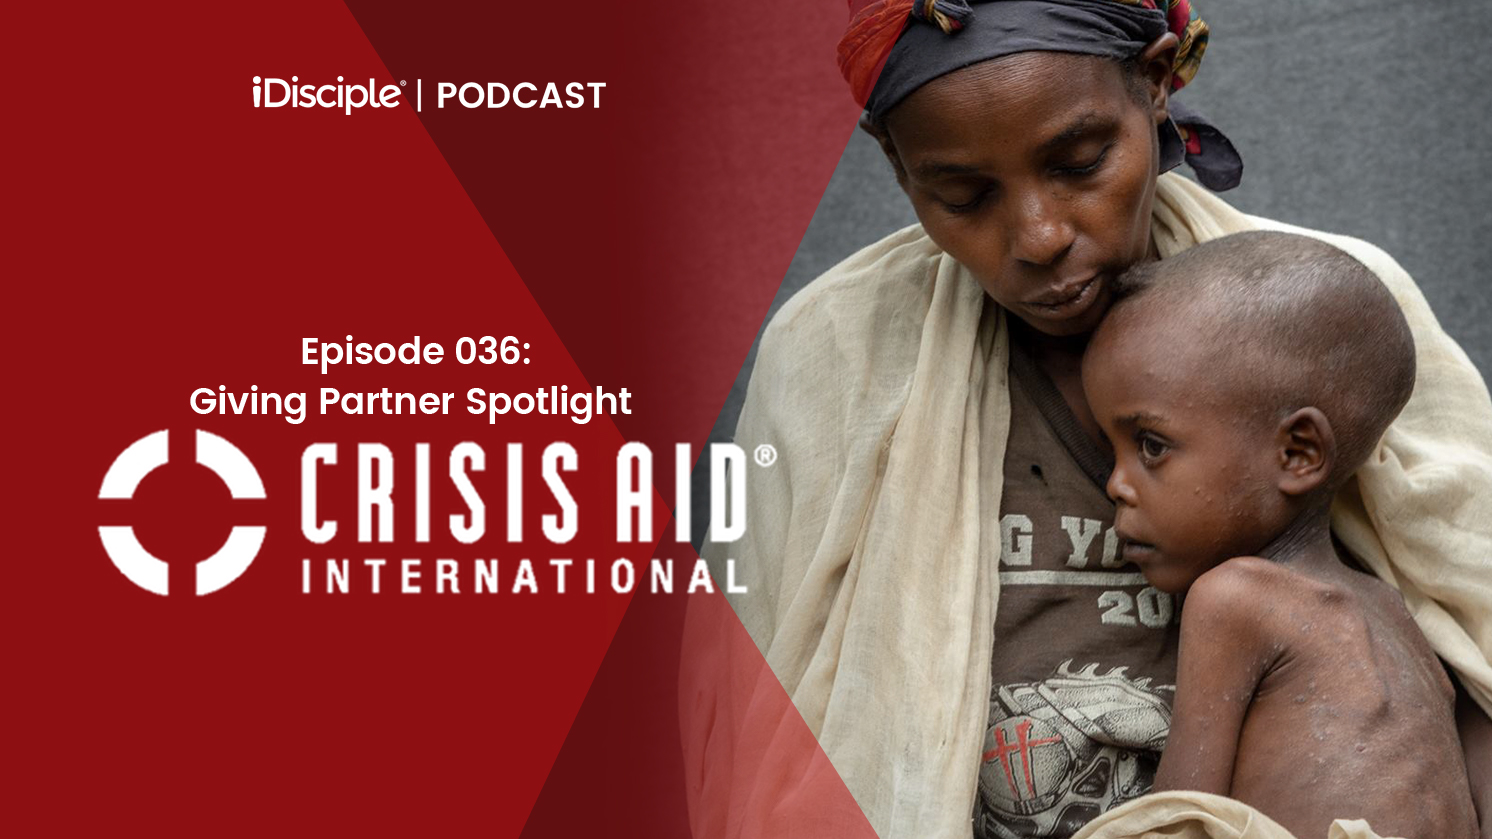 Crisis Aid International